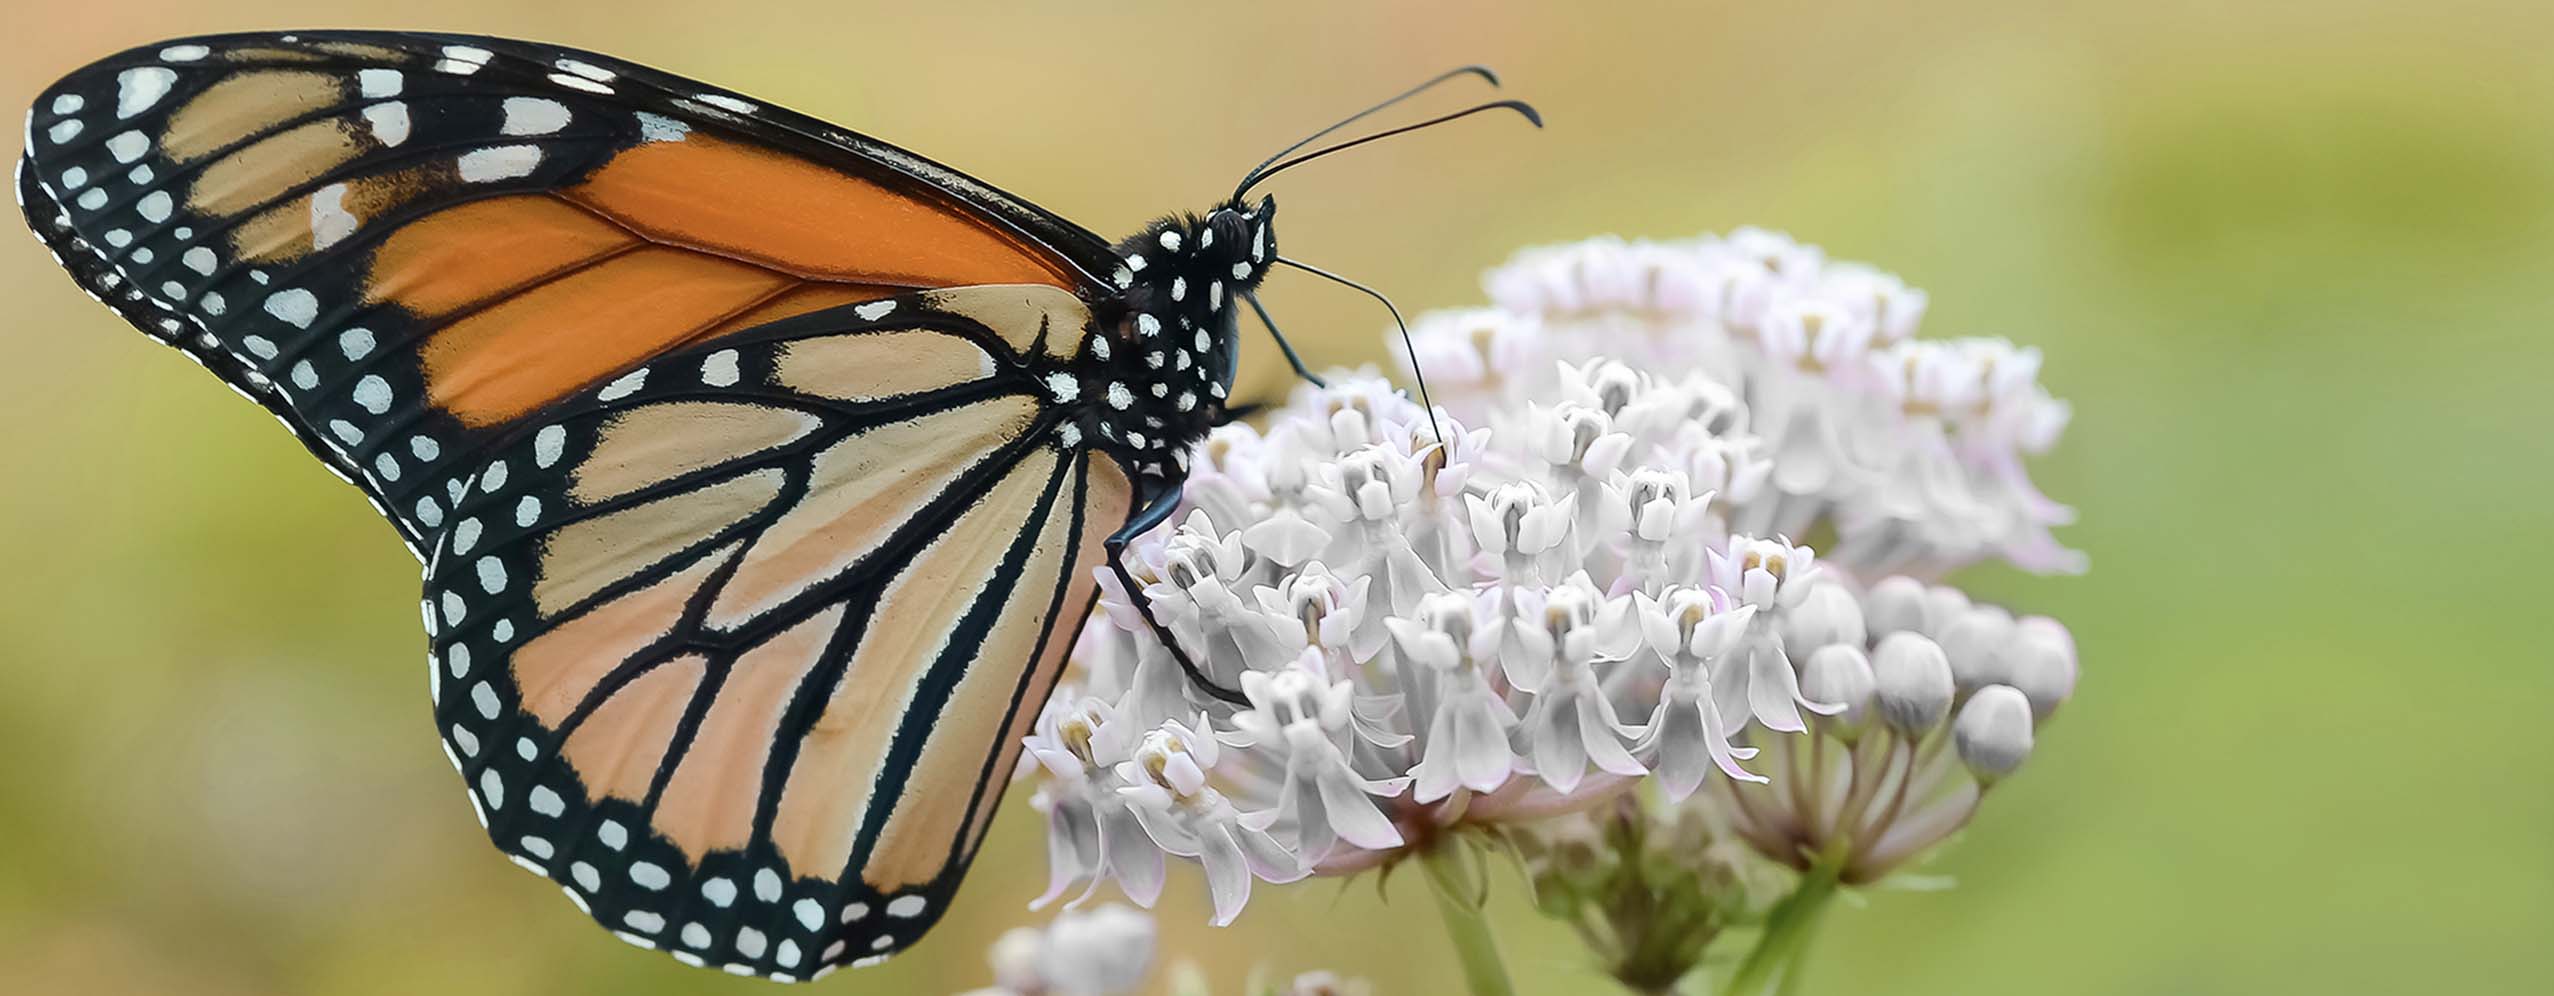 Monarch Butterfly Endangered? – Roger's Gardens